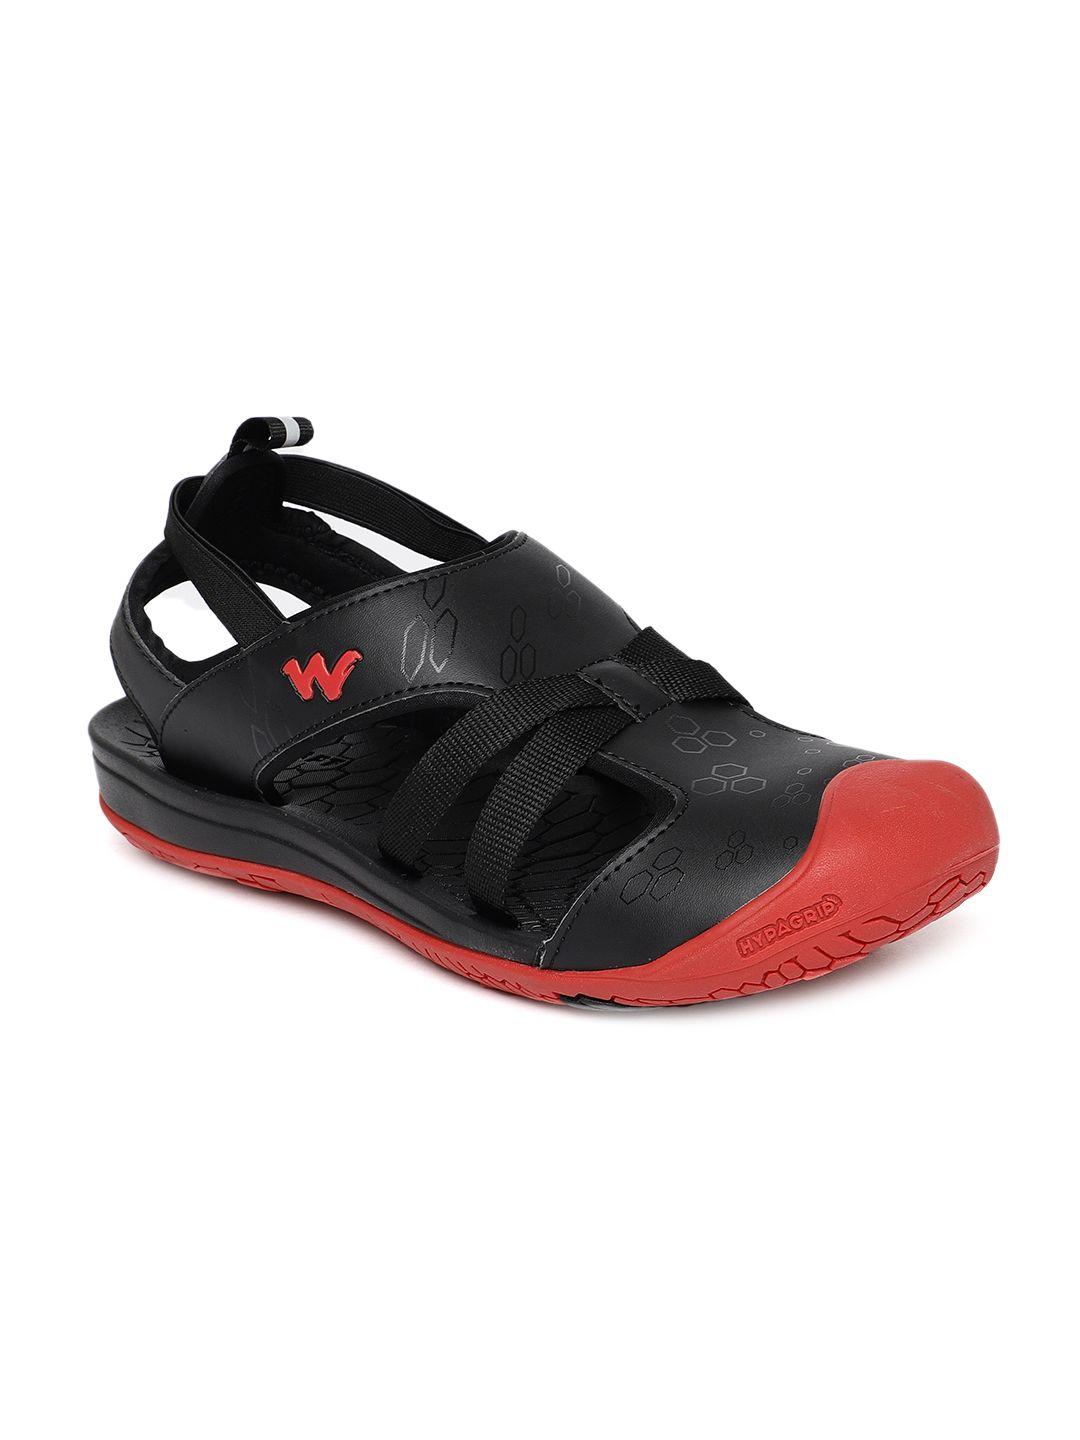 wildcraft men black solid sports sandals